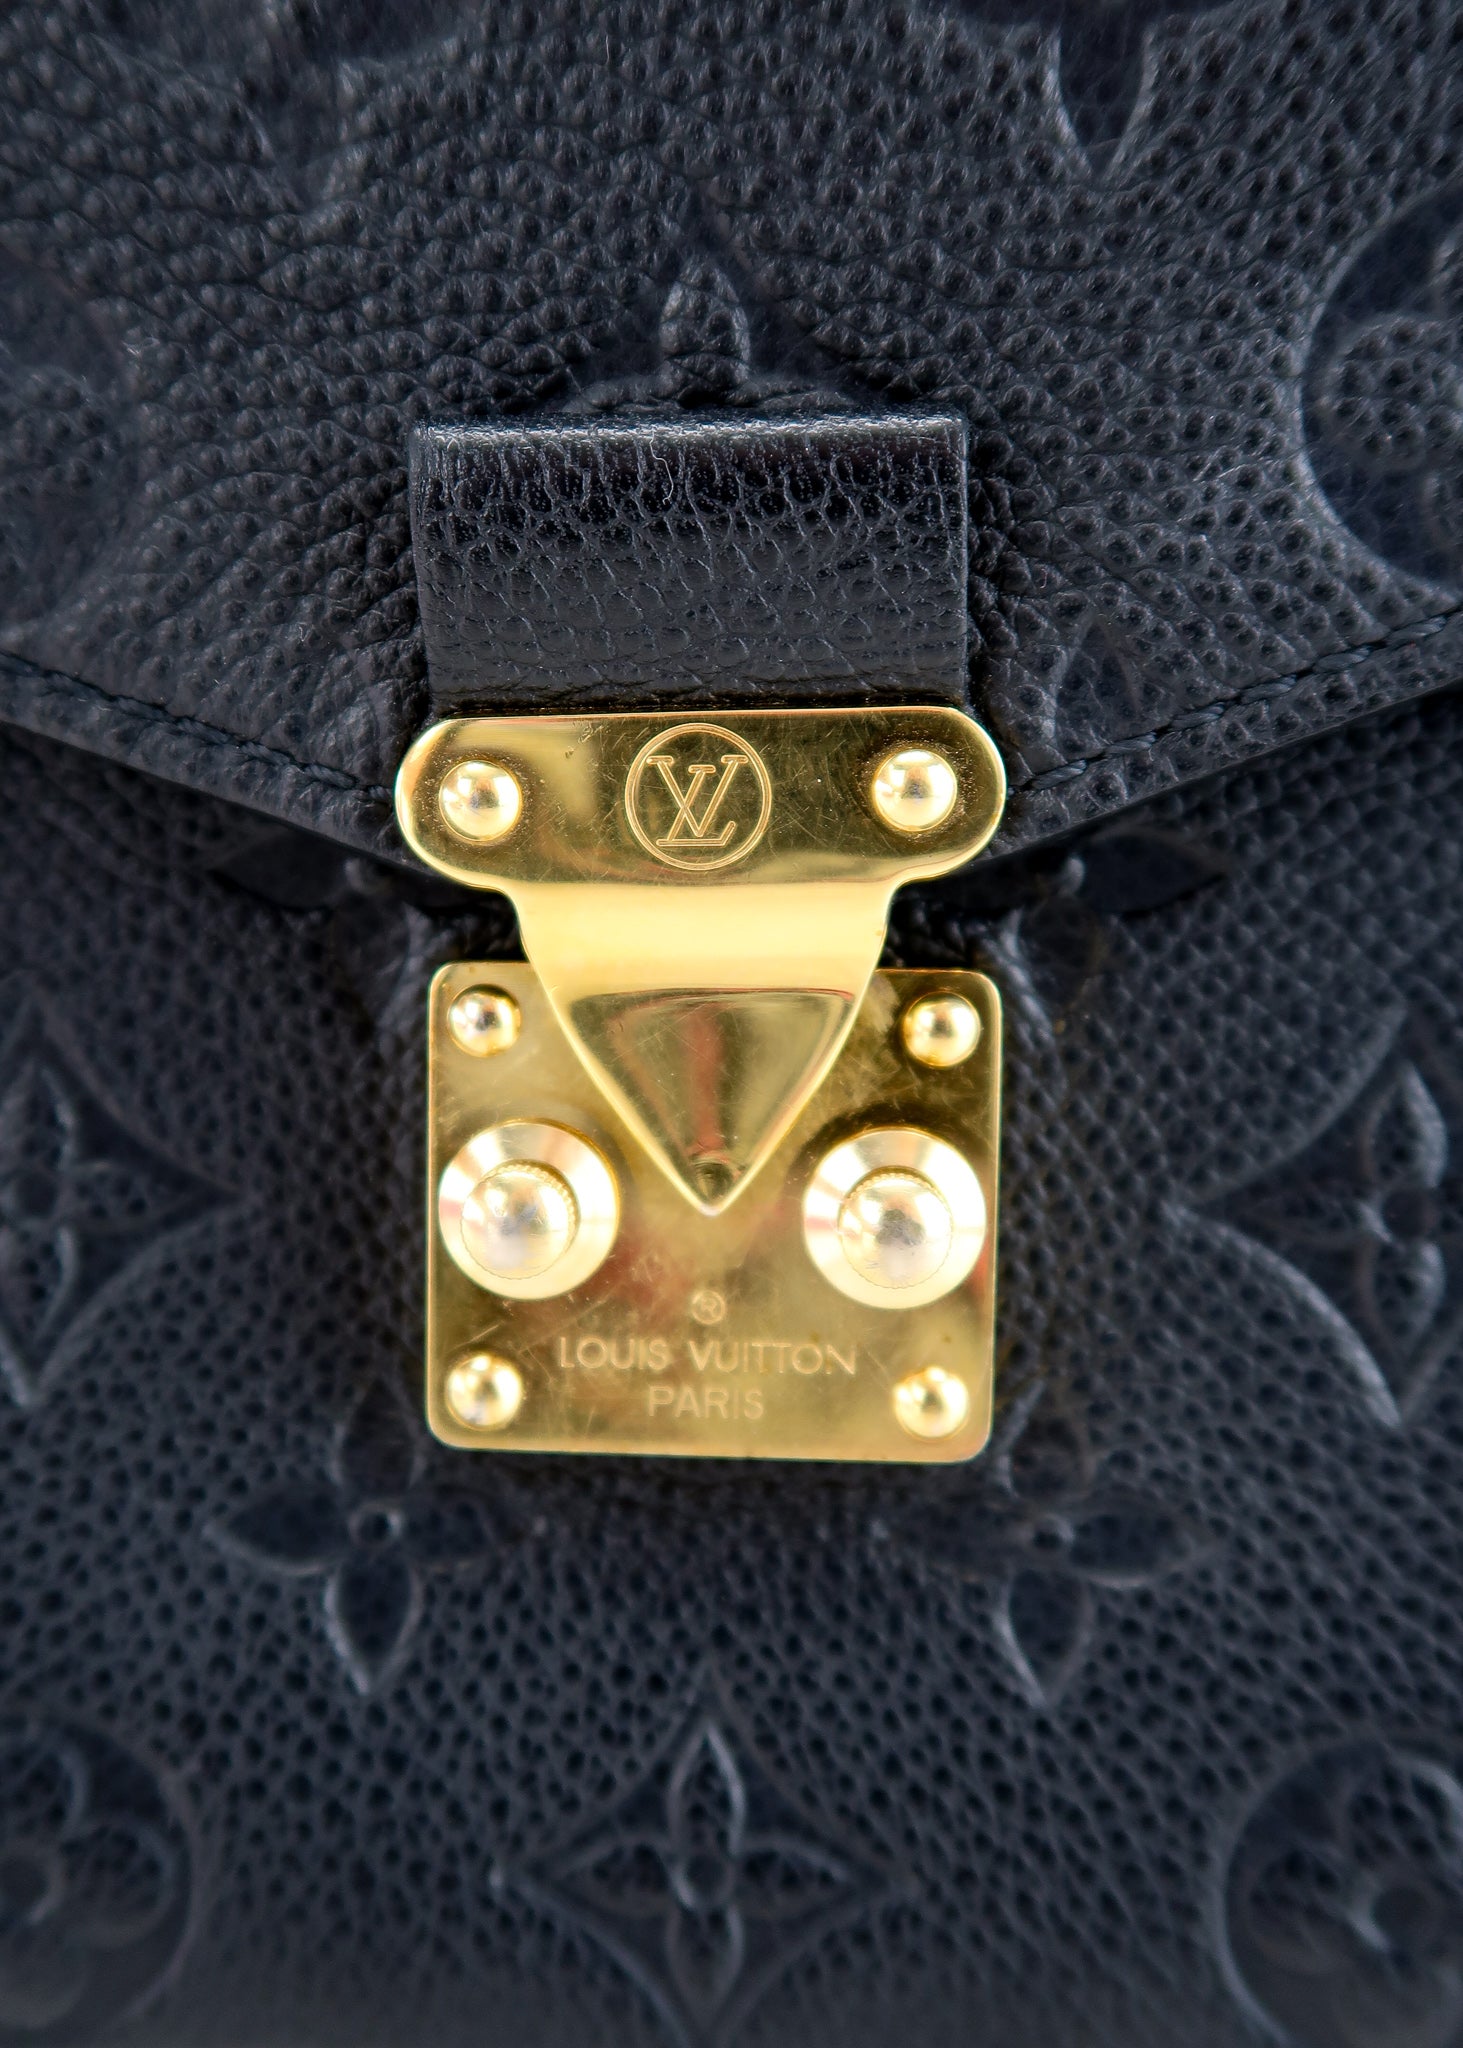 Louis Vuitton Empreinte Pochette Metis Black